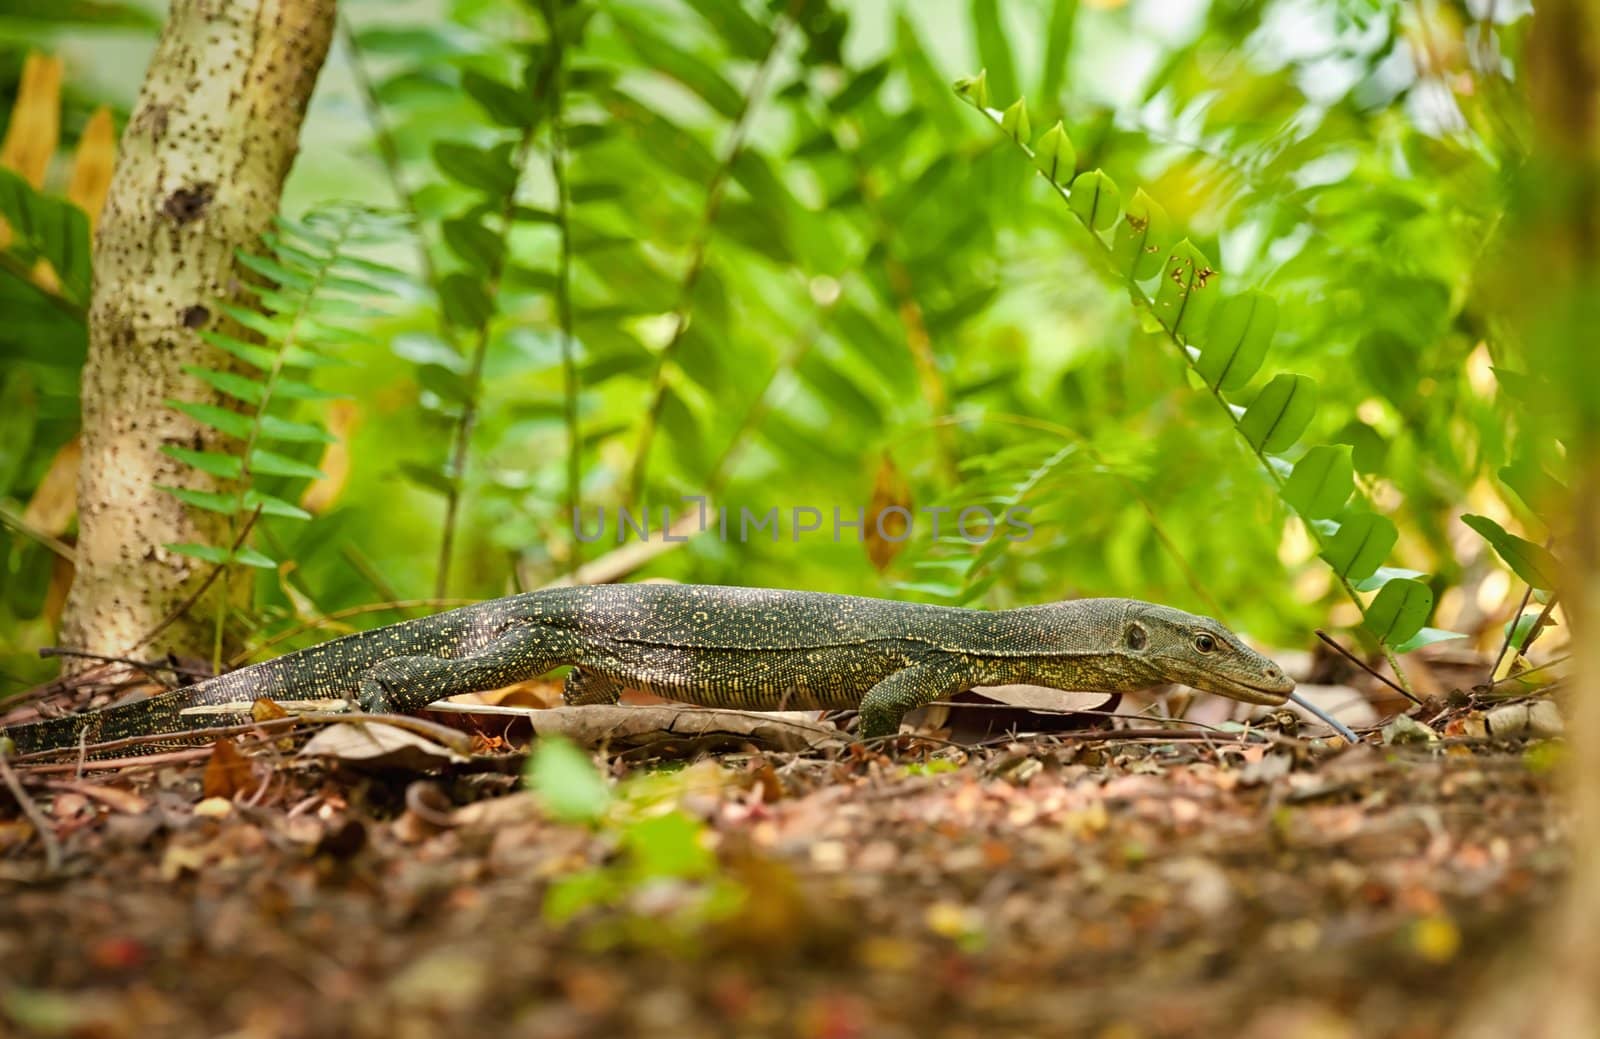 goanna lizard in undergrowth by clearviewstock